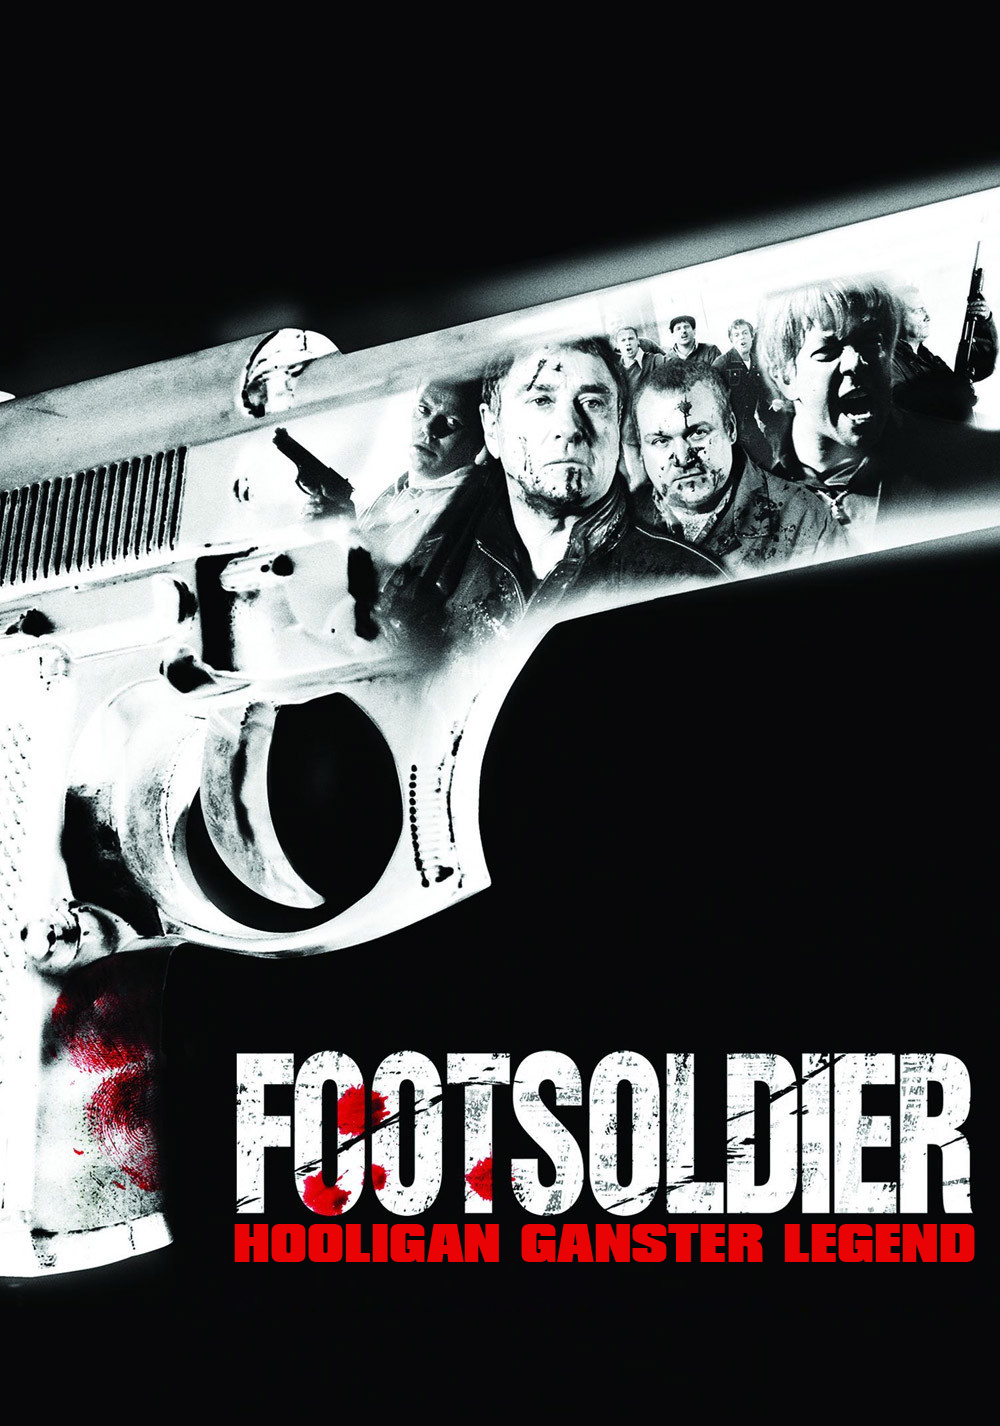 Stiahni si Filmy CZ/SK dabing Rise of the Footsoldier (2007)(CZ)[1080p] = CSFD 79%